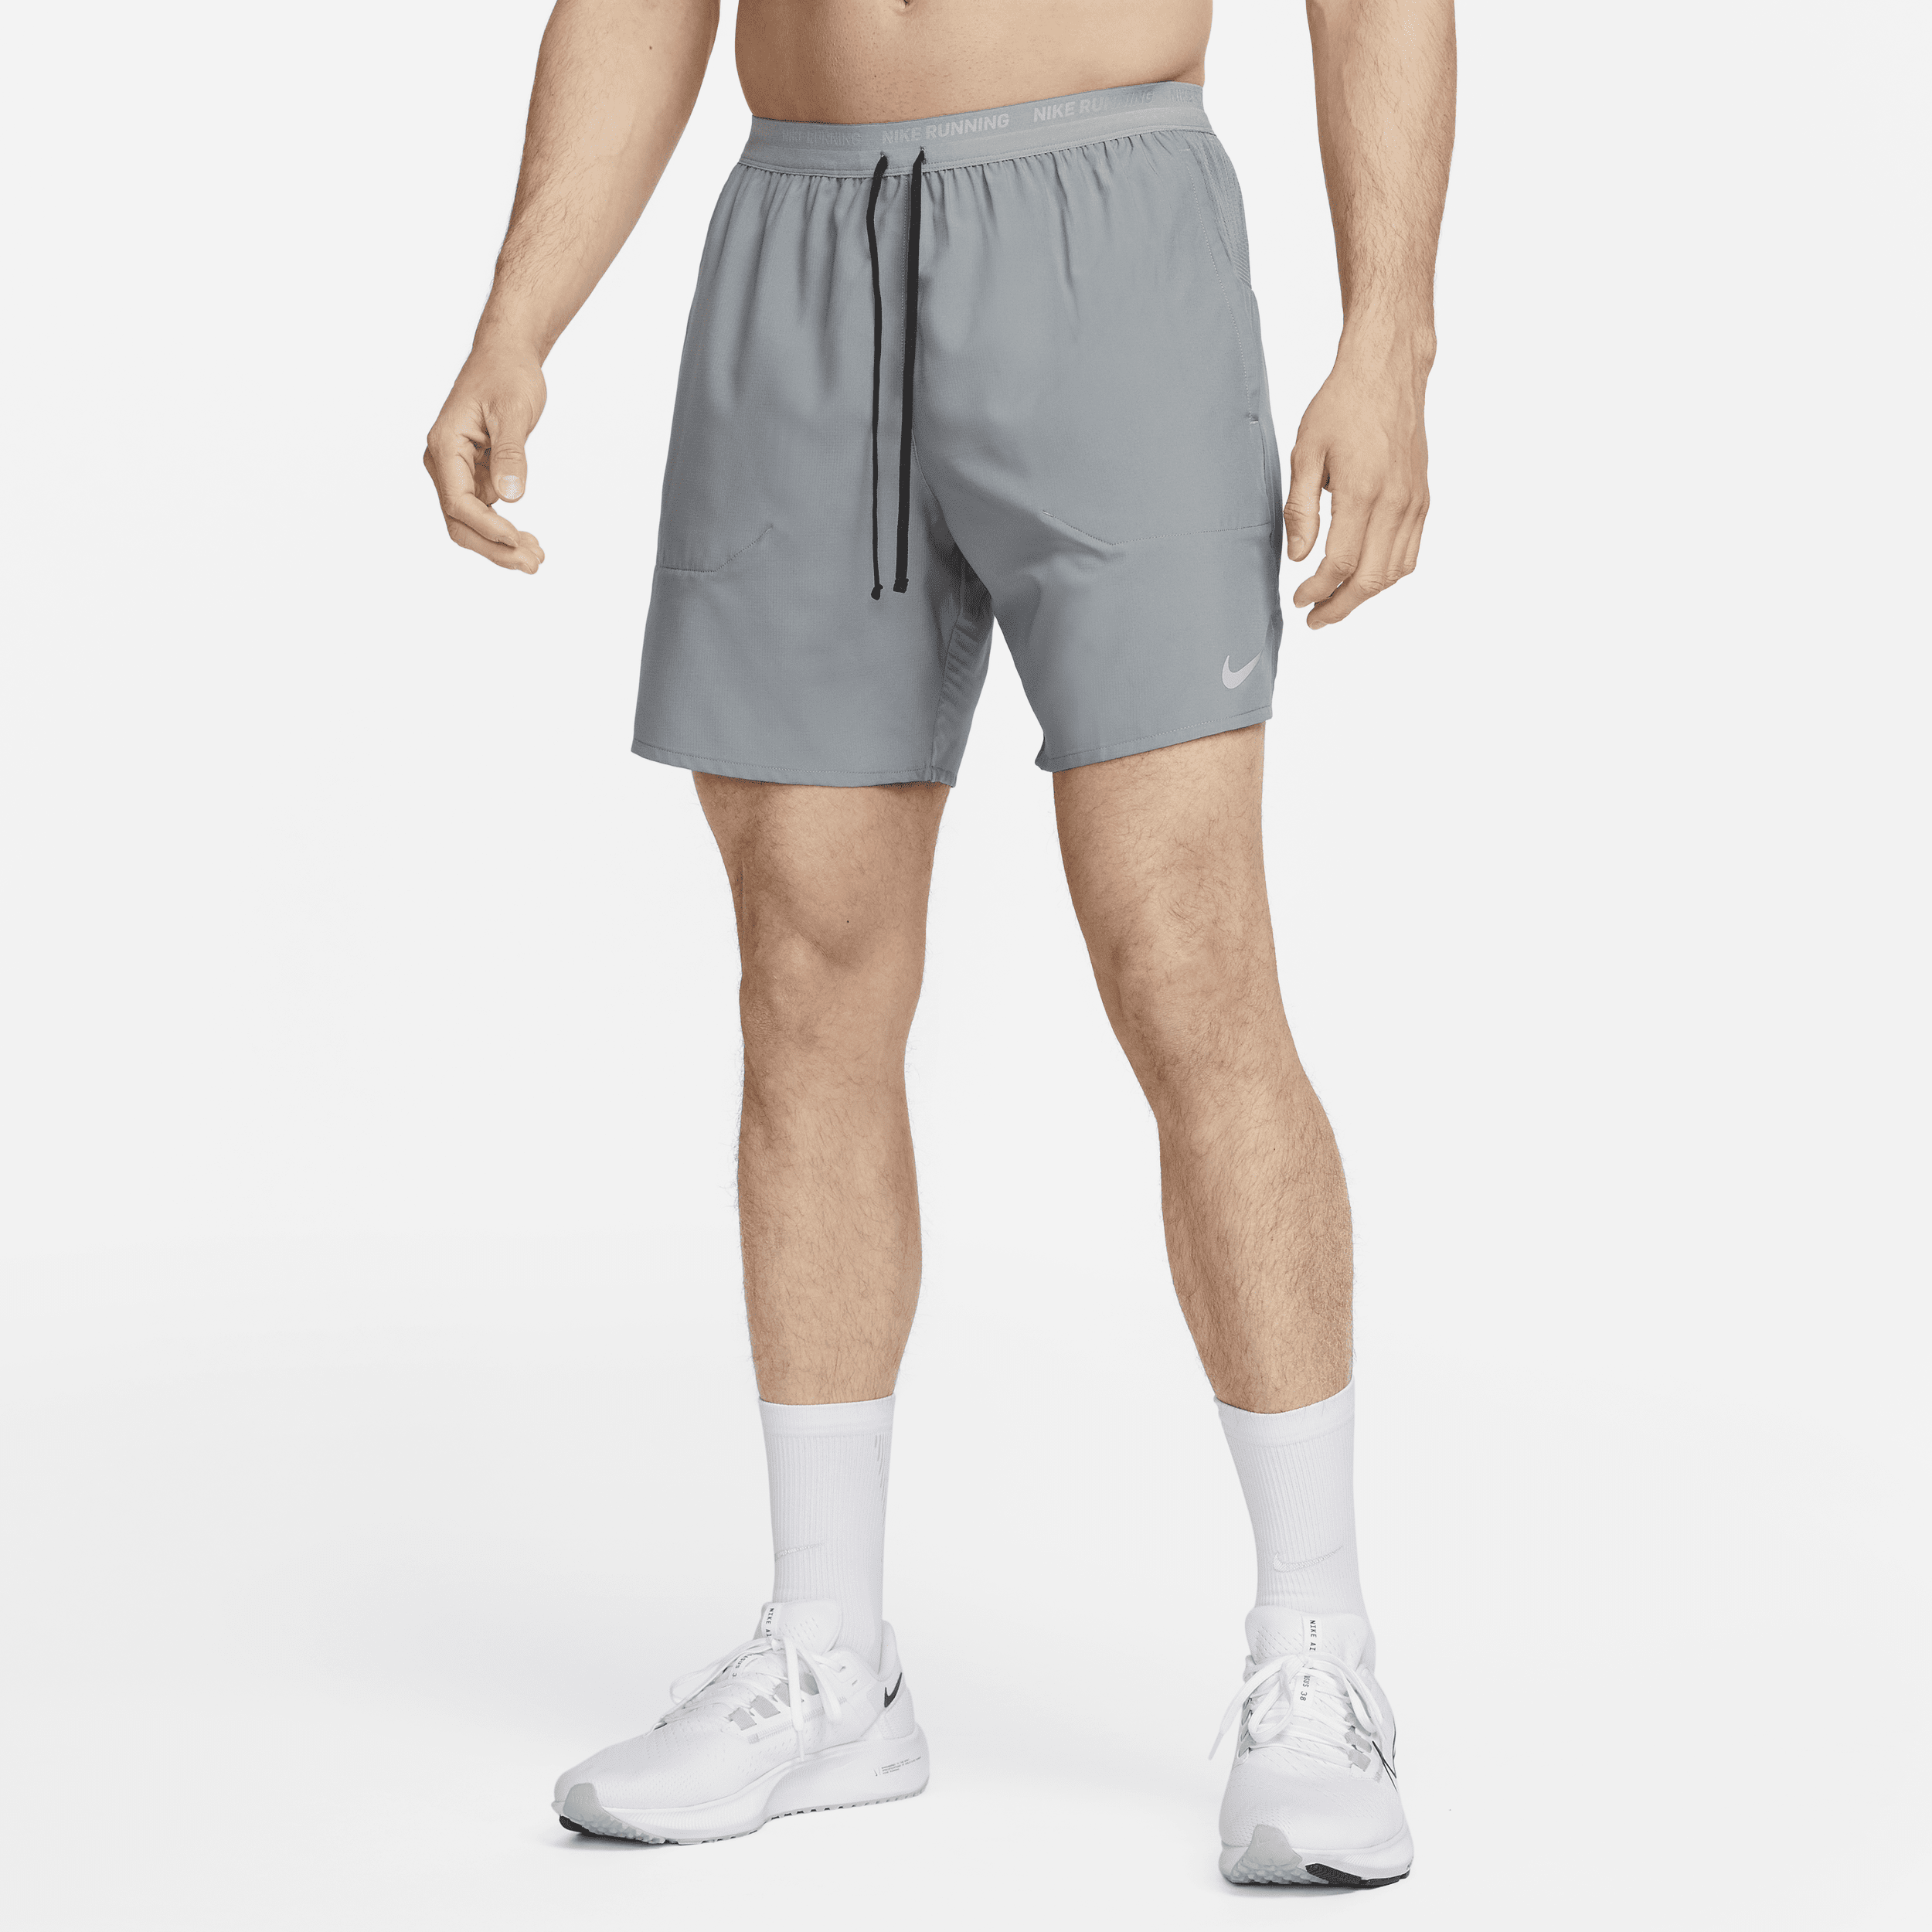 Nike Stride Dri-FIT hardloopshorts met binnenbroek voor heren (18 cm) - Grijs